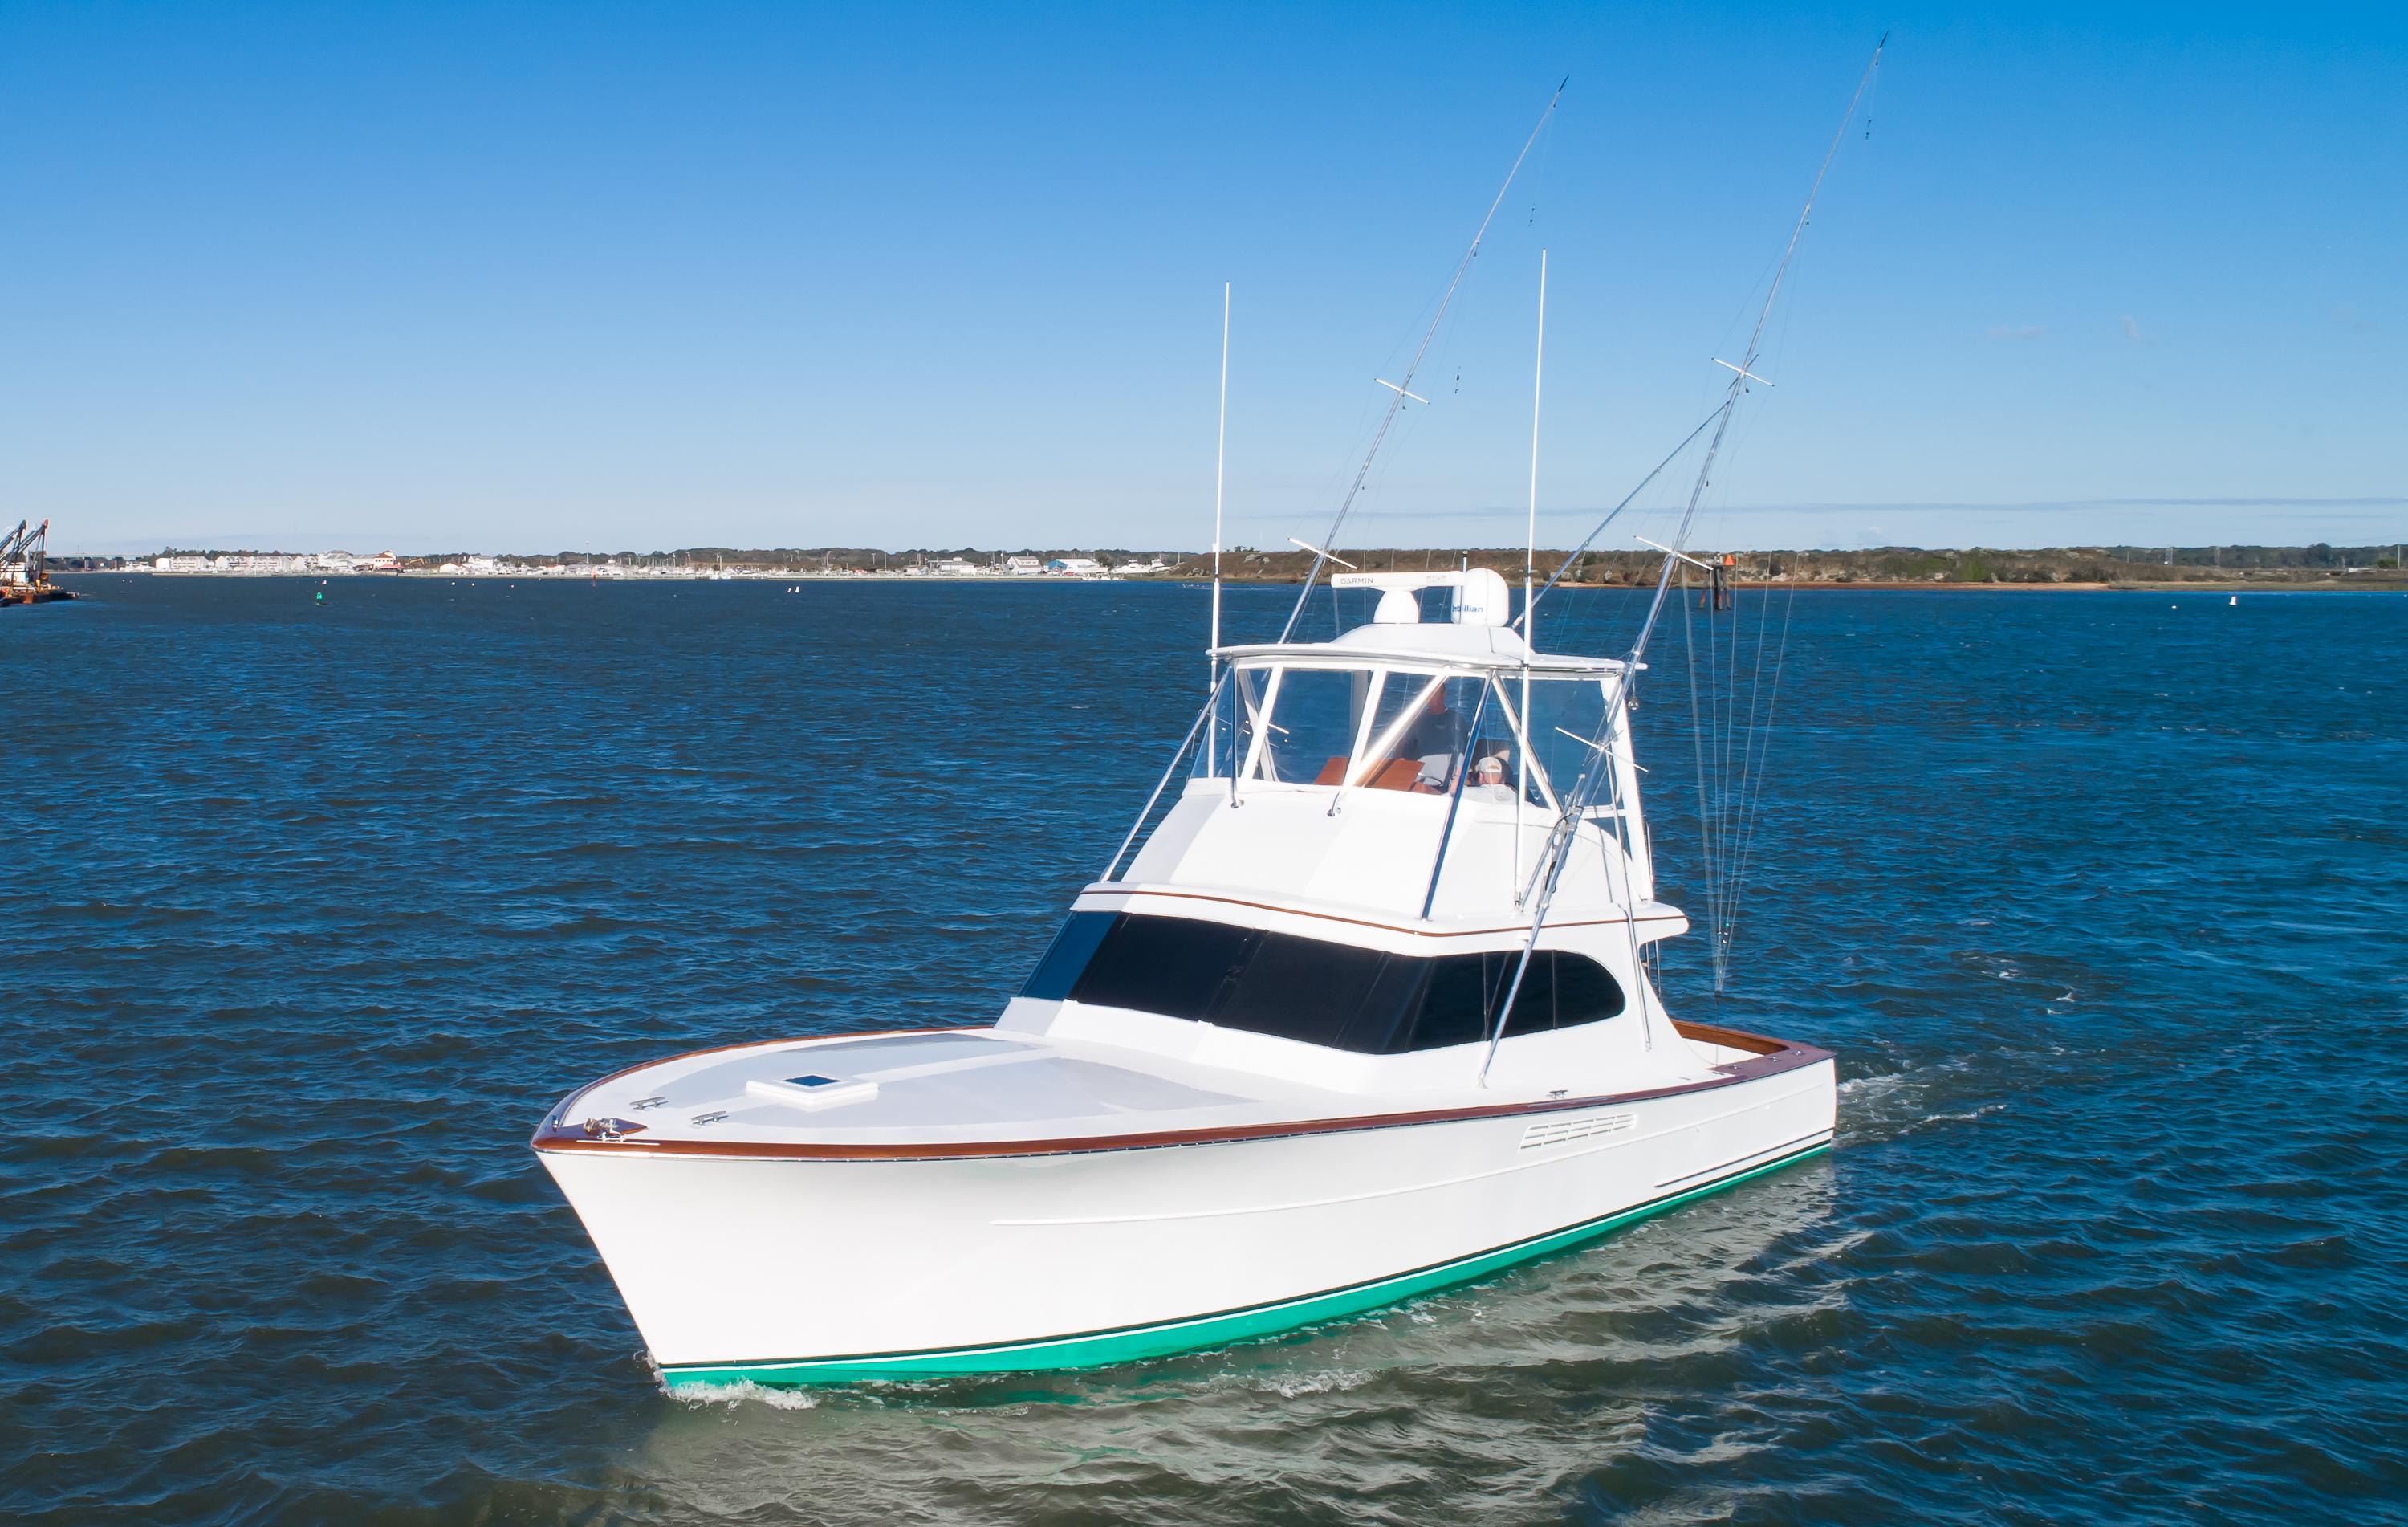 Merritt boats for sale - Boat Trader